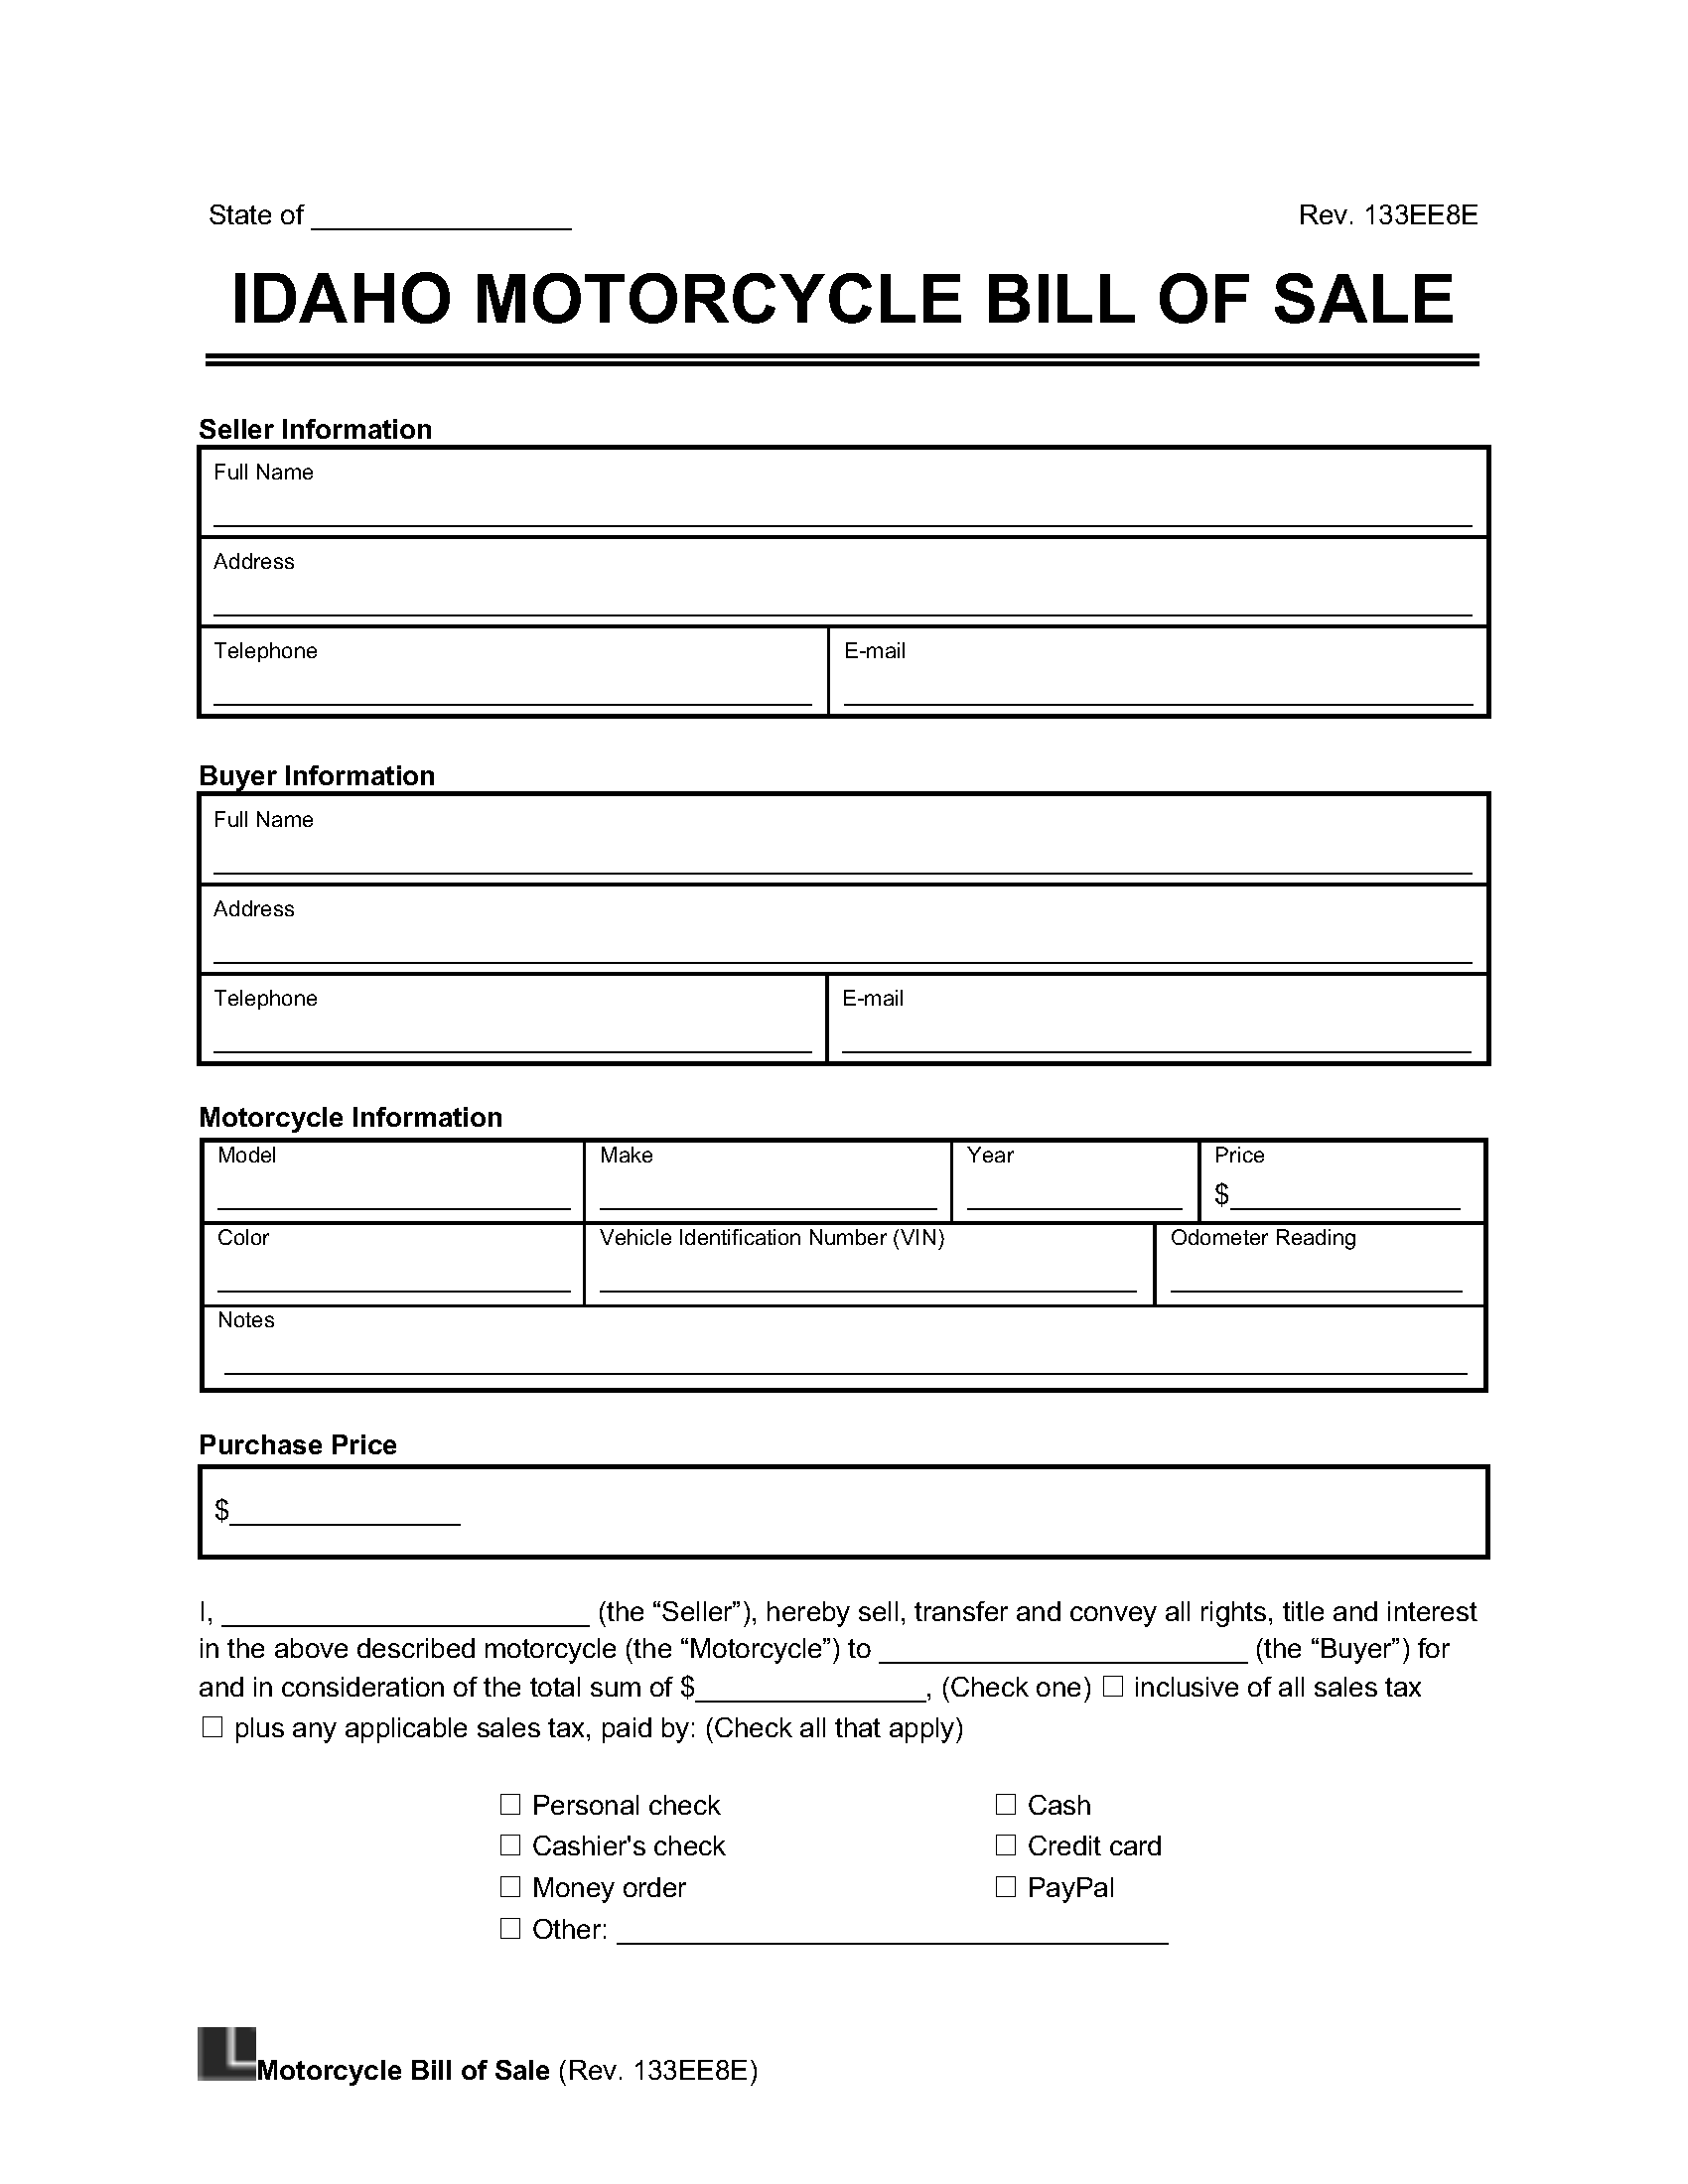 idaho motorcycle bill of sale